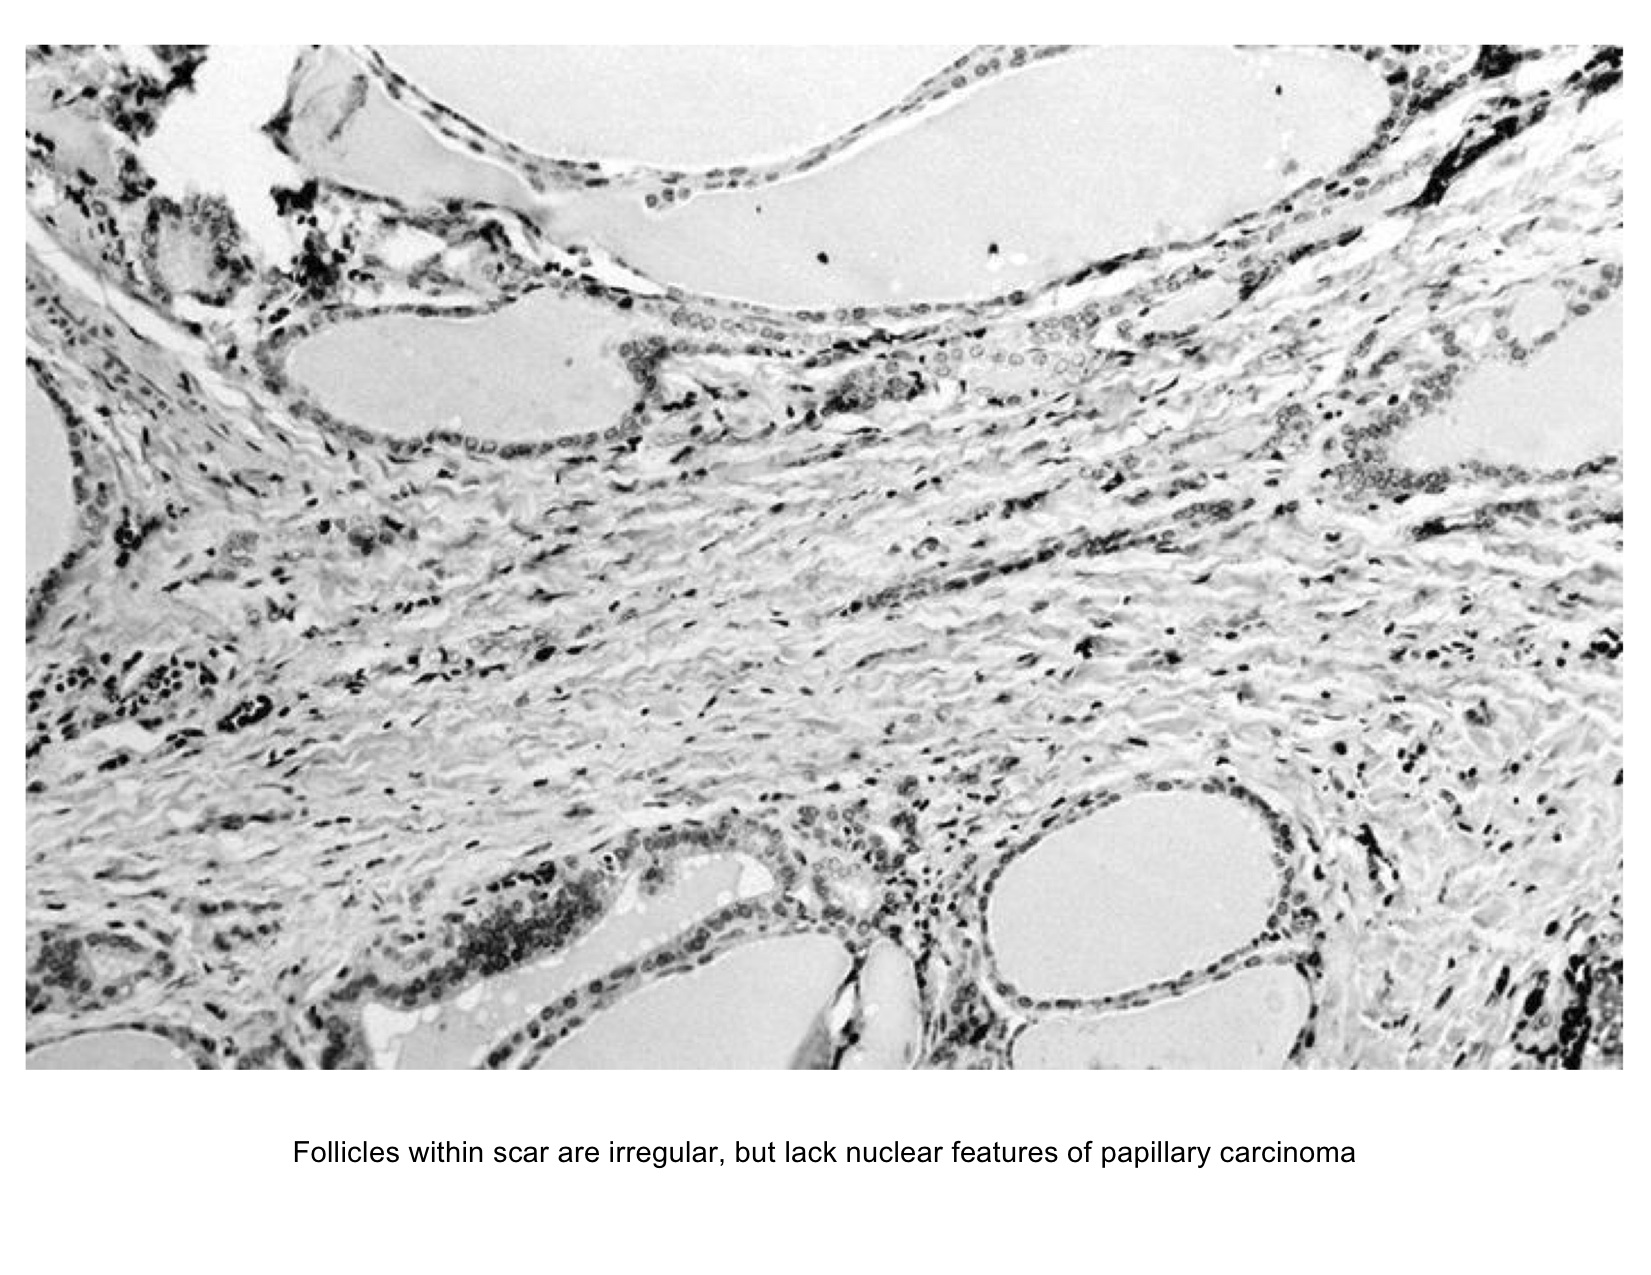 Fibrosis (Image courtesy of AFIP and PathologyOutlines.com; http://www.pathologyoutlines.com/topic/thyroidriedel.html )